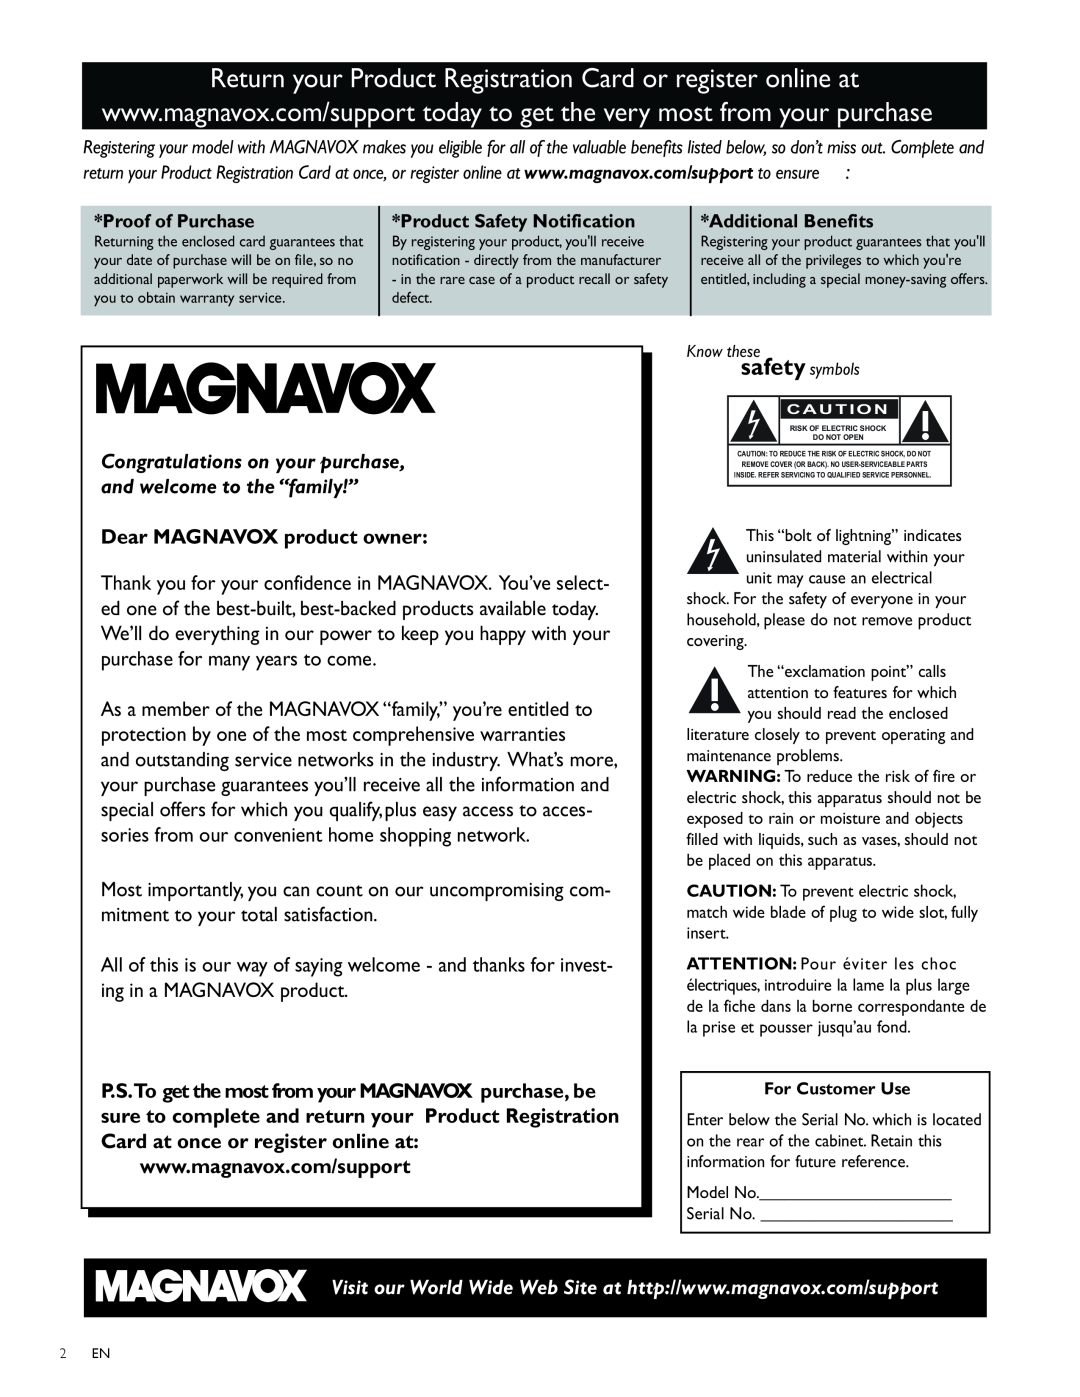 Magnavox 47MF439B user manual safety symbols, Dear MAGNAVOX product owner 